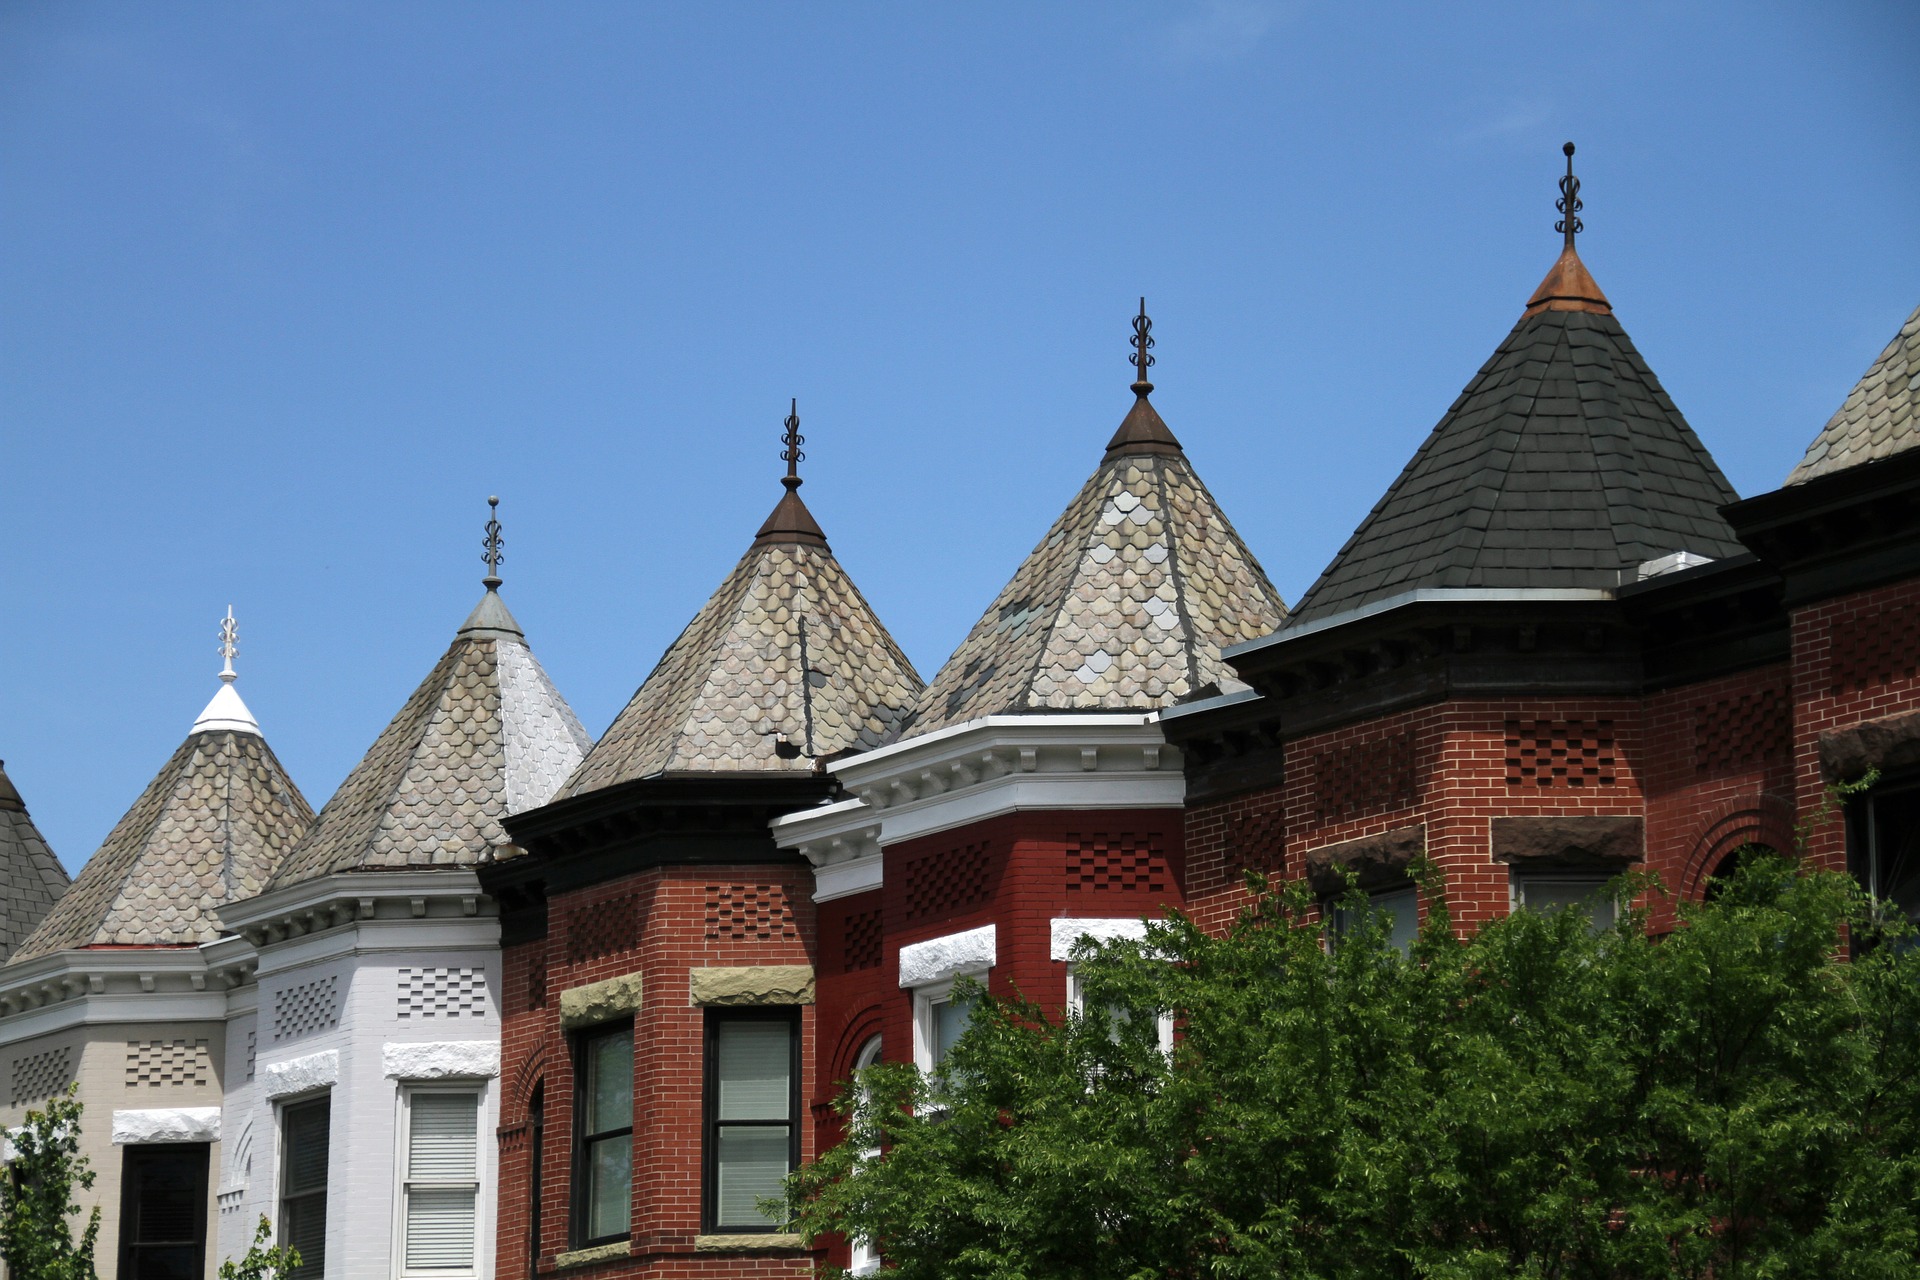 Rooftops, Washington DC, image: Monica Volpin via Pixabay